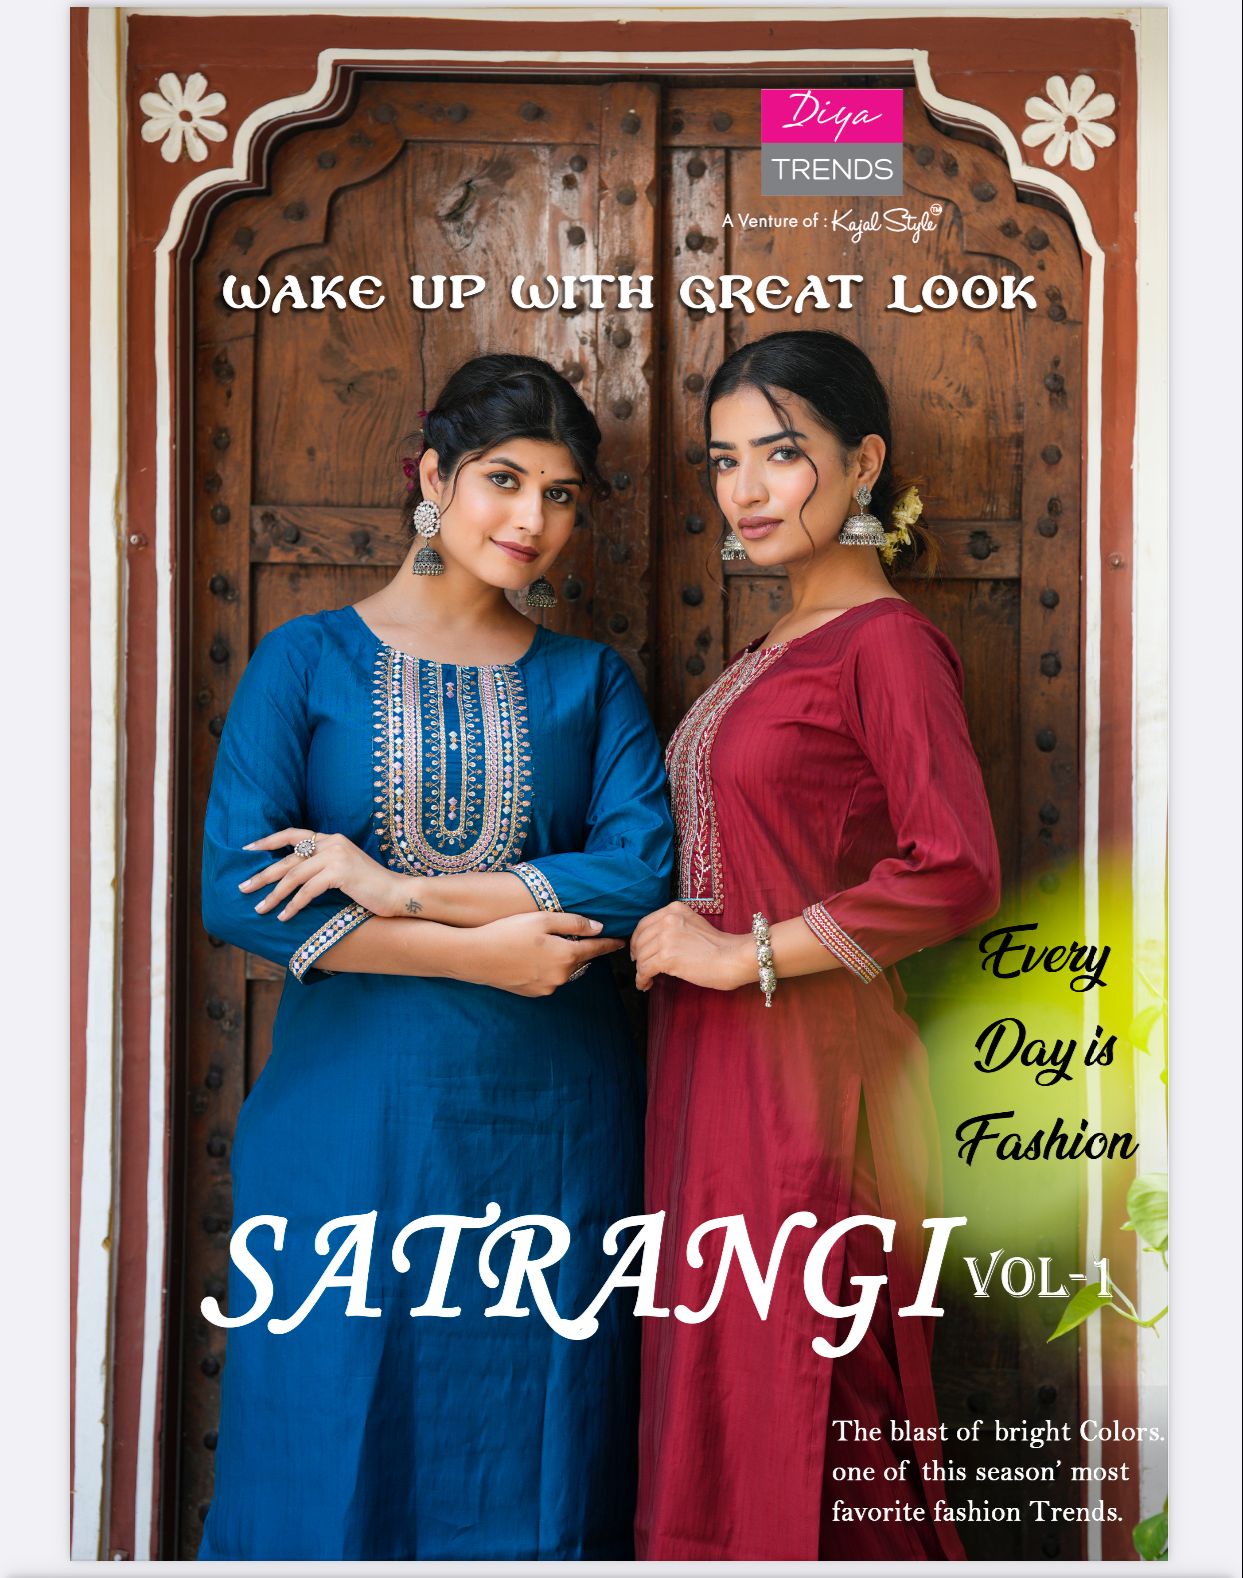 Diya Satrangi Vol 1 collection 12